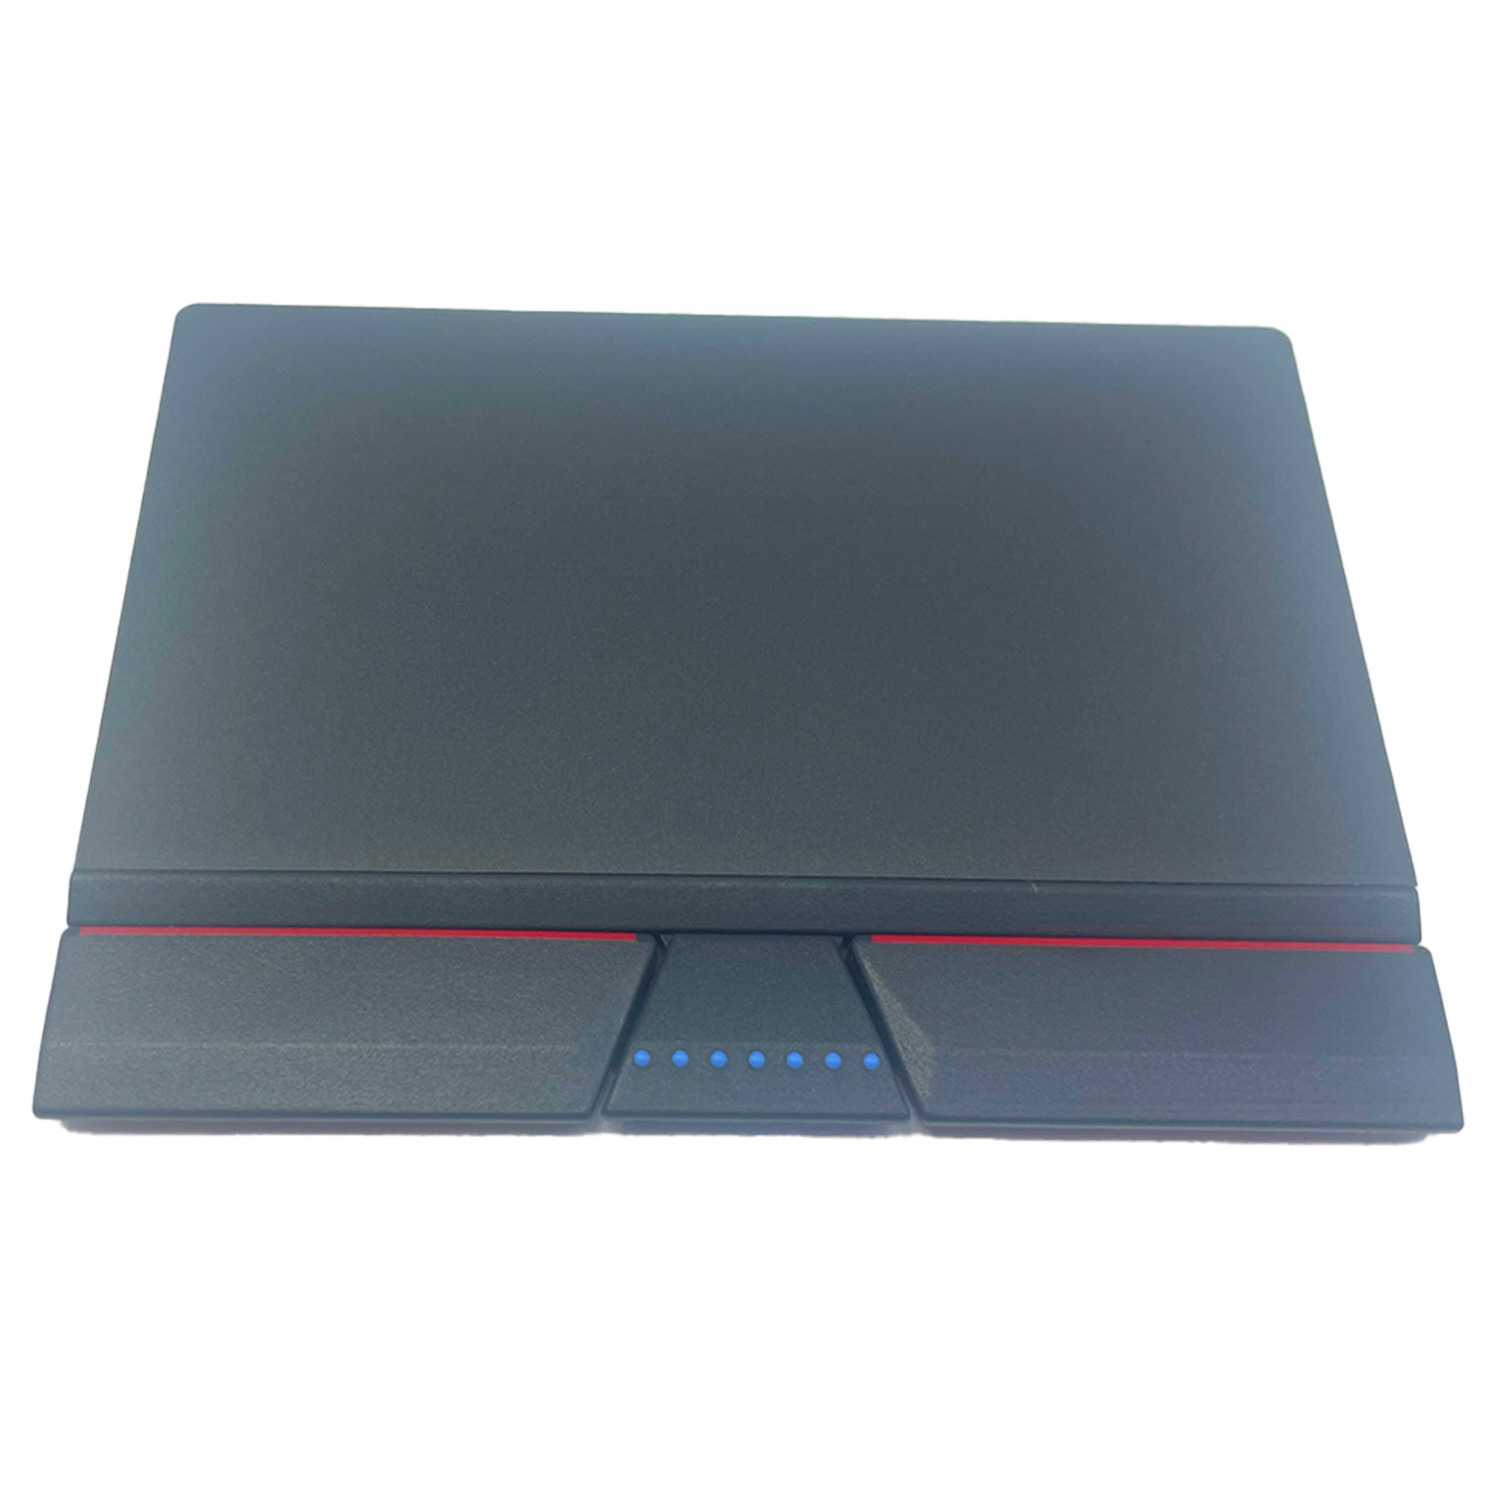 New Trackpad Touchpad For Lenovo Thinkpad L440 T440S T440P T450 T540 Three Keys